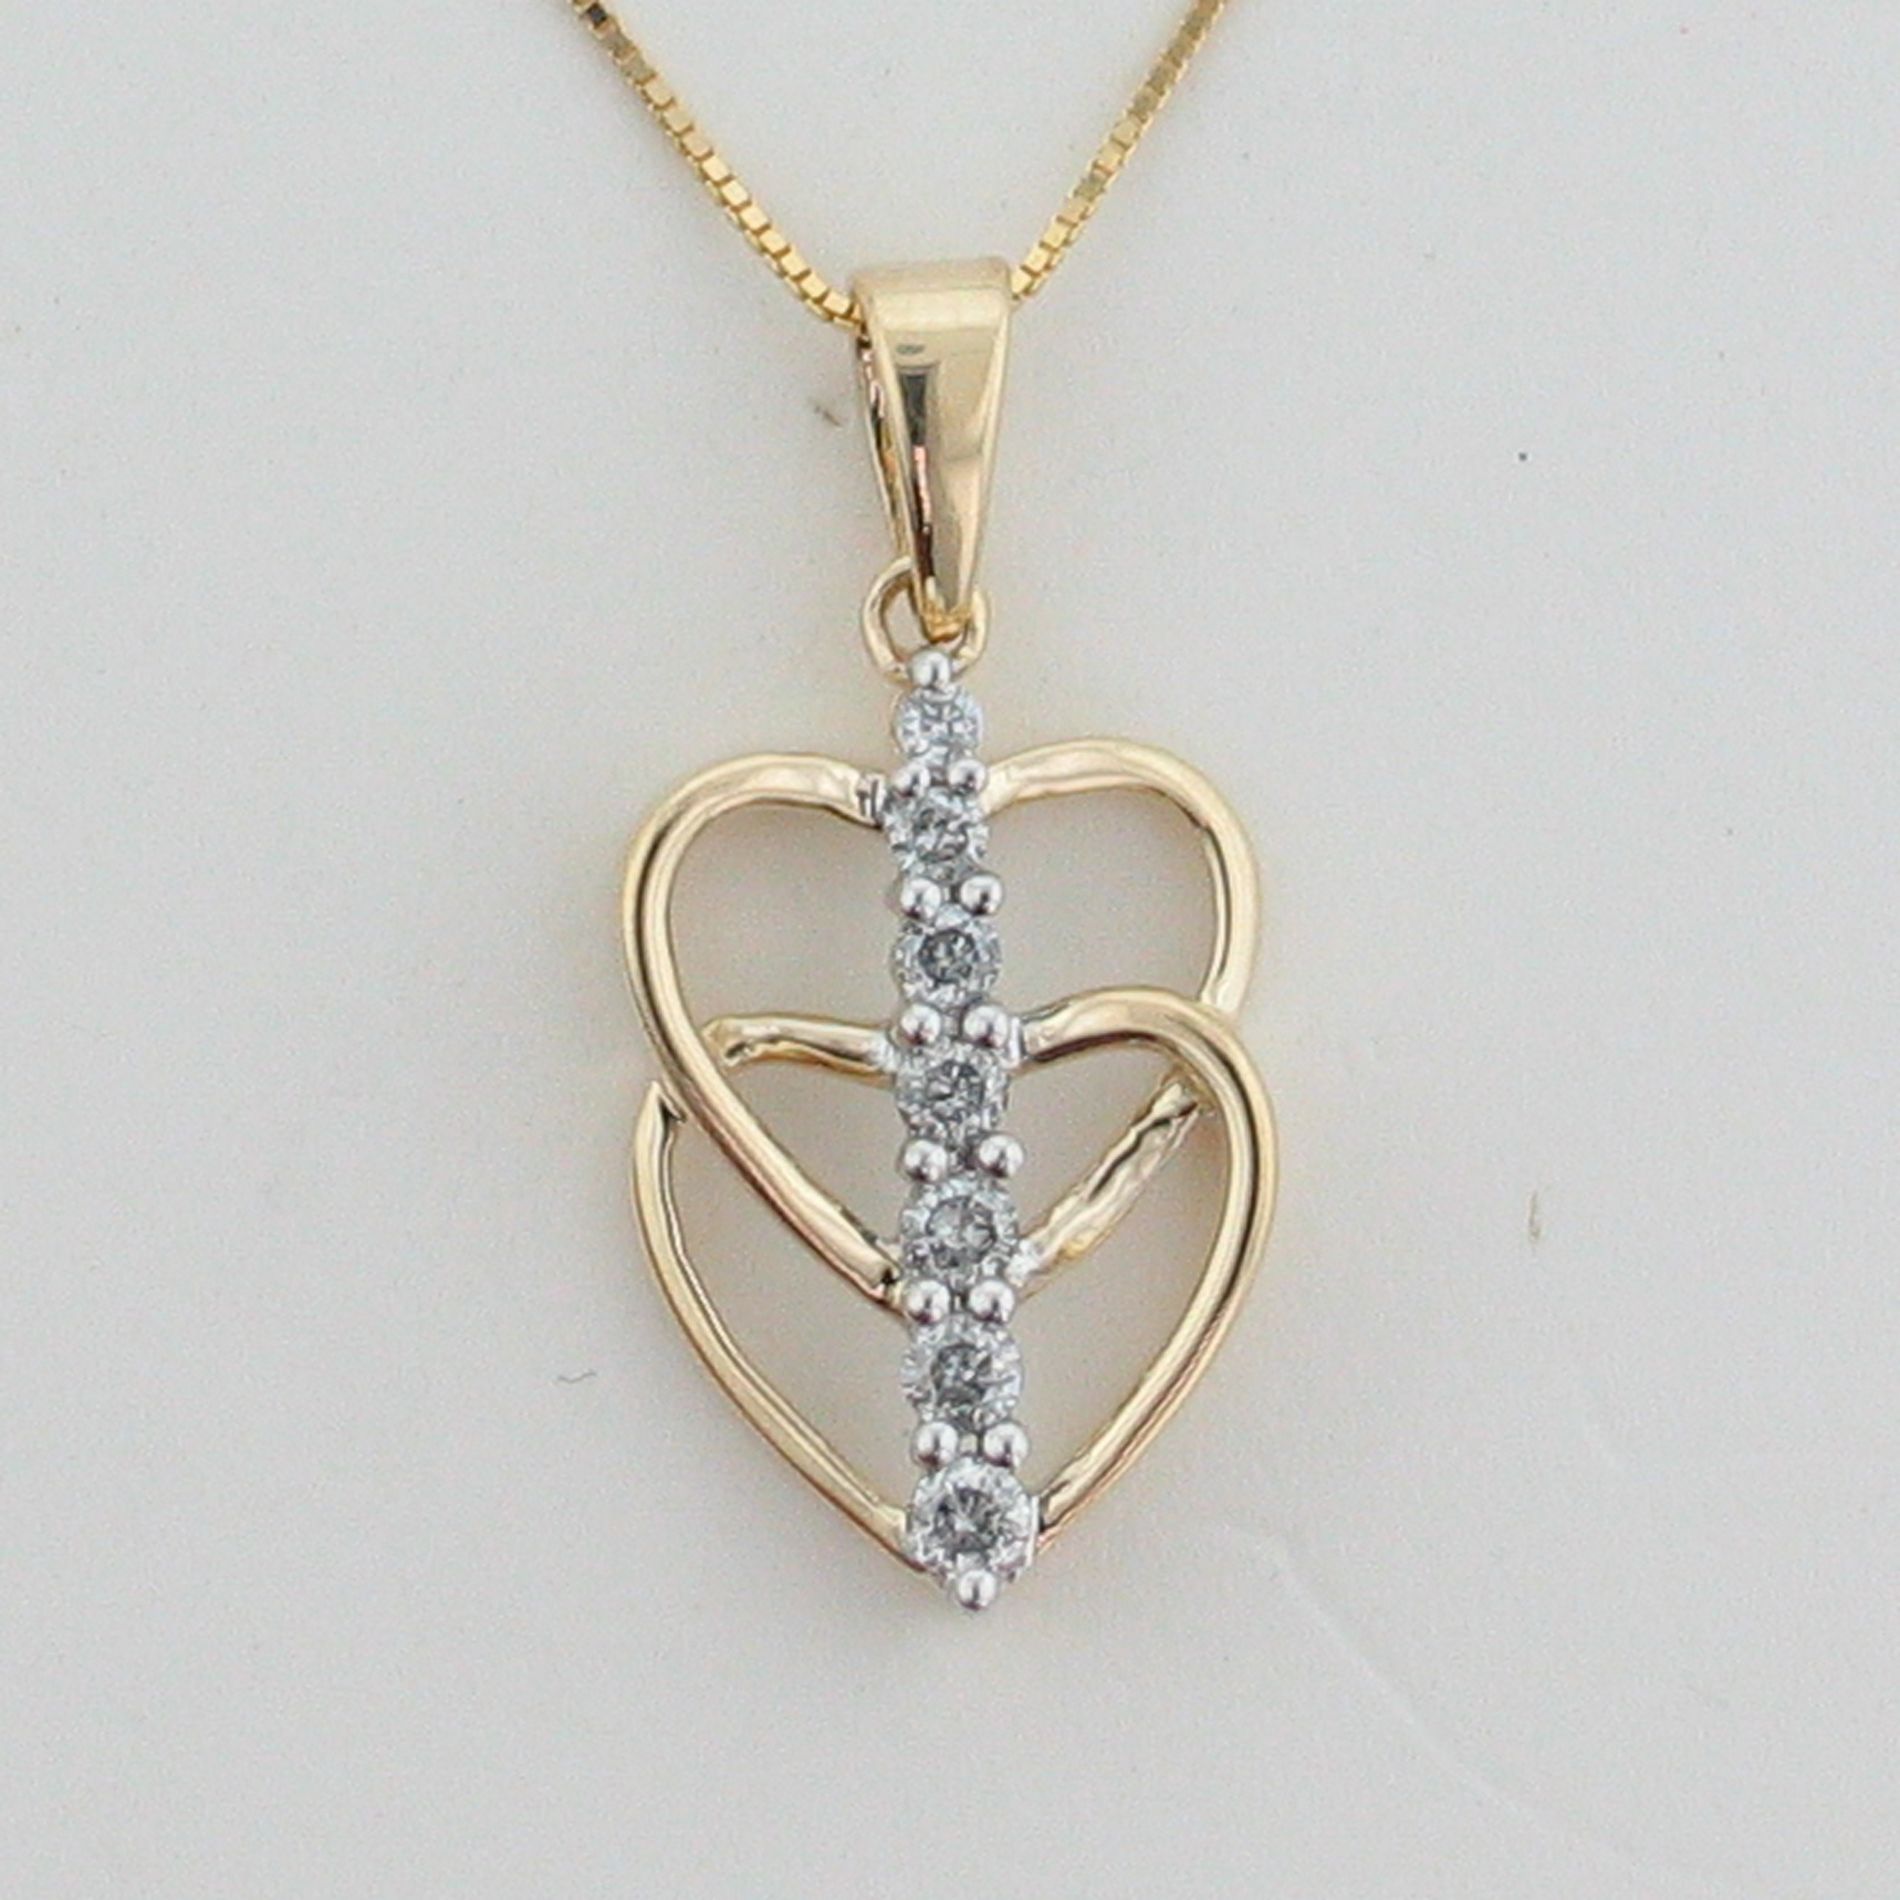 1/4 cttw Diamond Heart Pendant. 10kt Yellow Gold